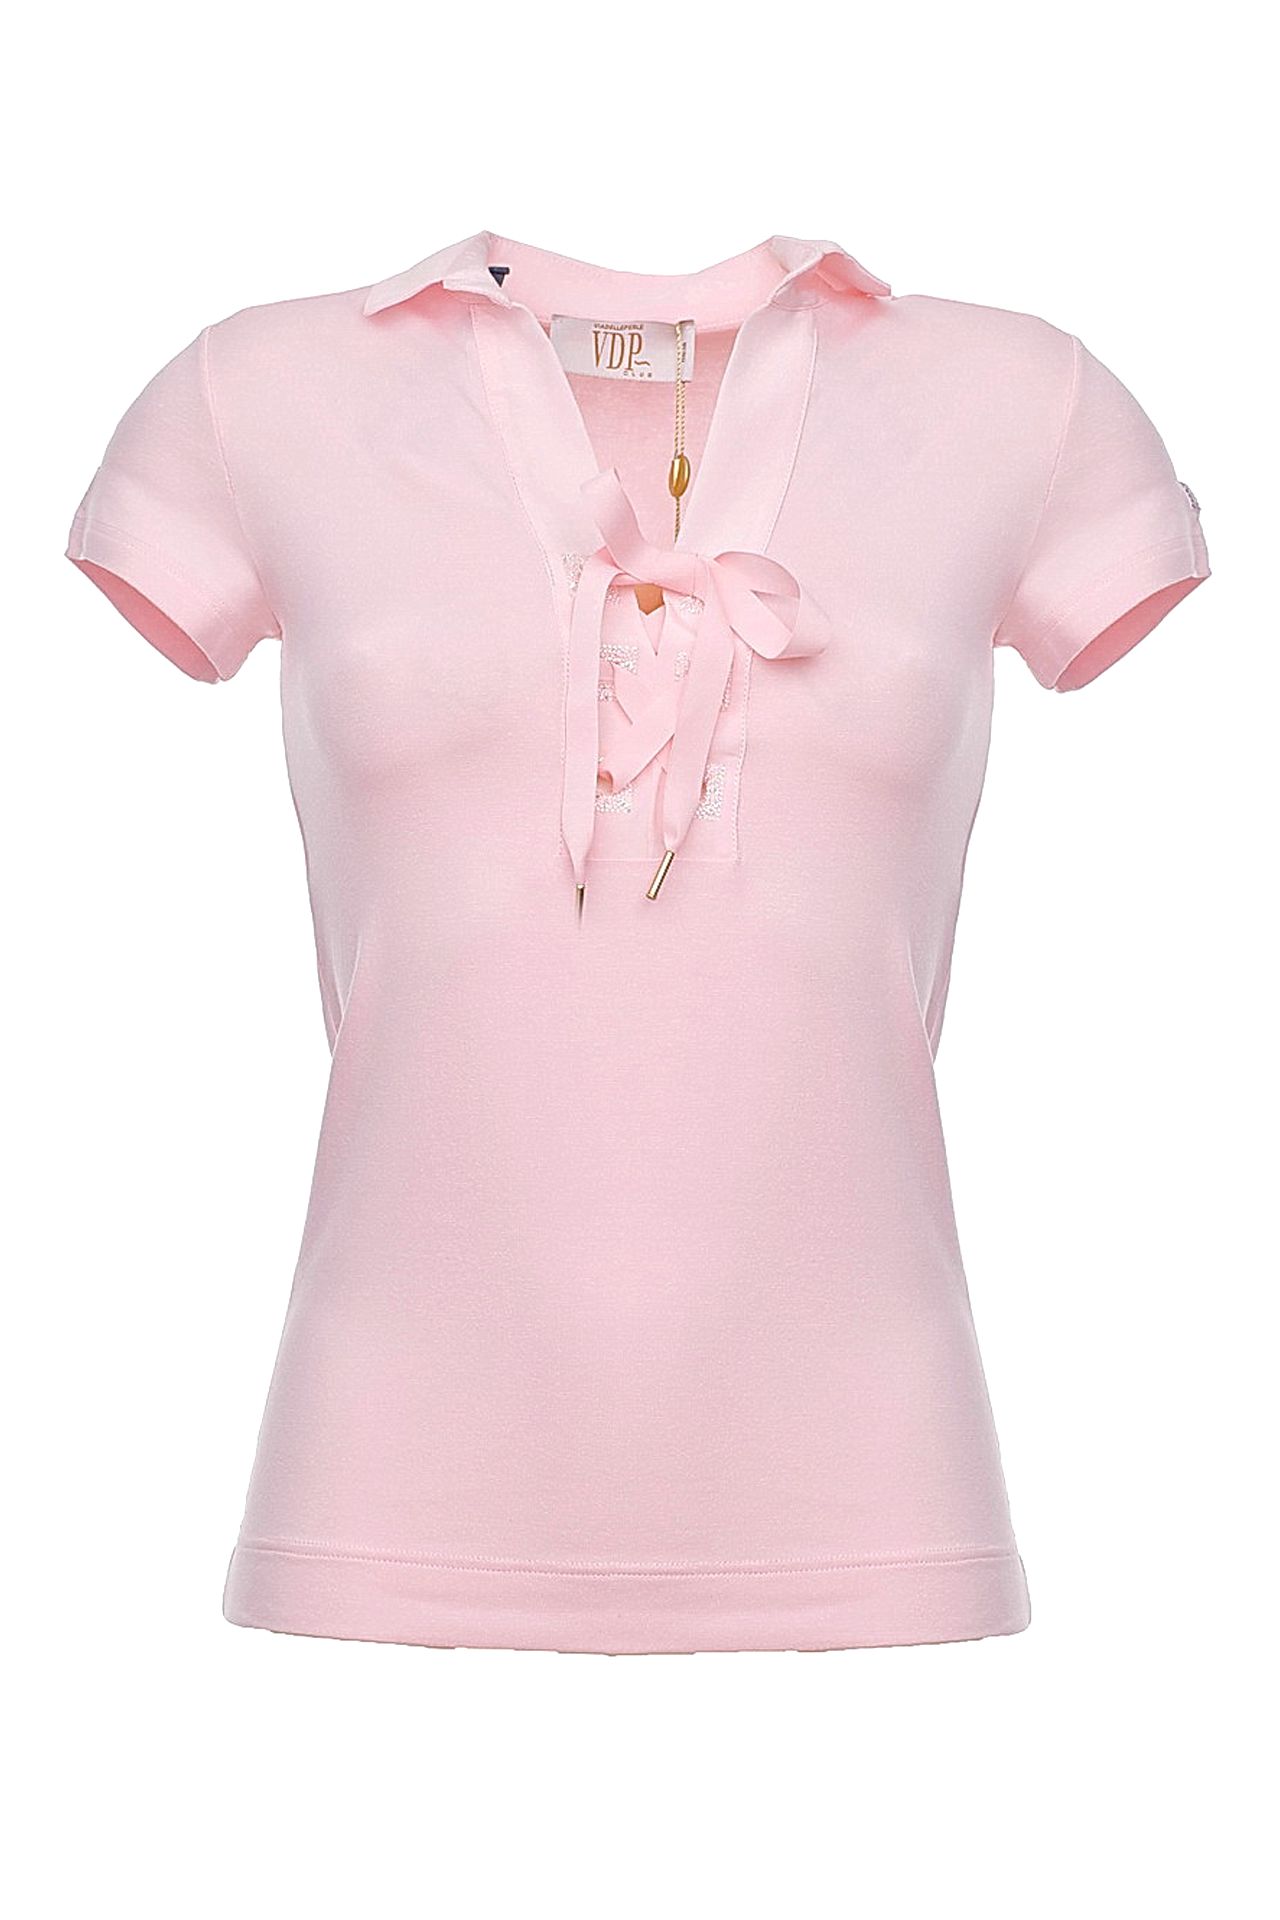 Одежда женская Поло VDP VIA DELLE PERLE (7208/14.2). Купить за 8450 руб.